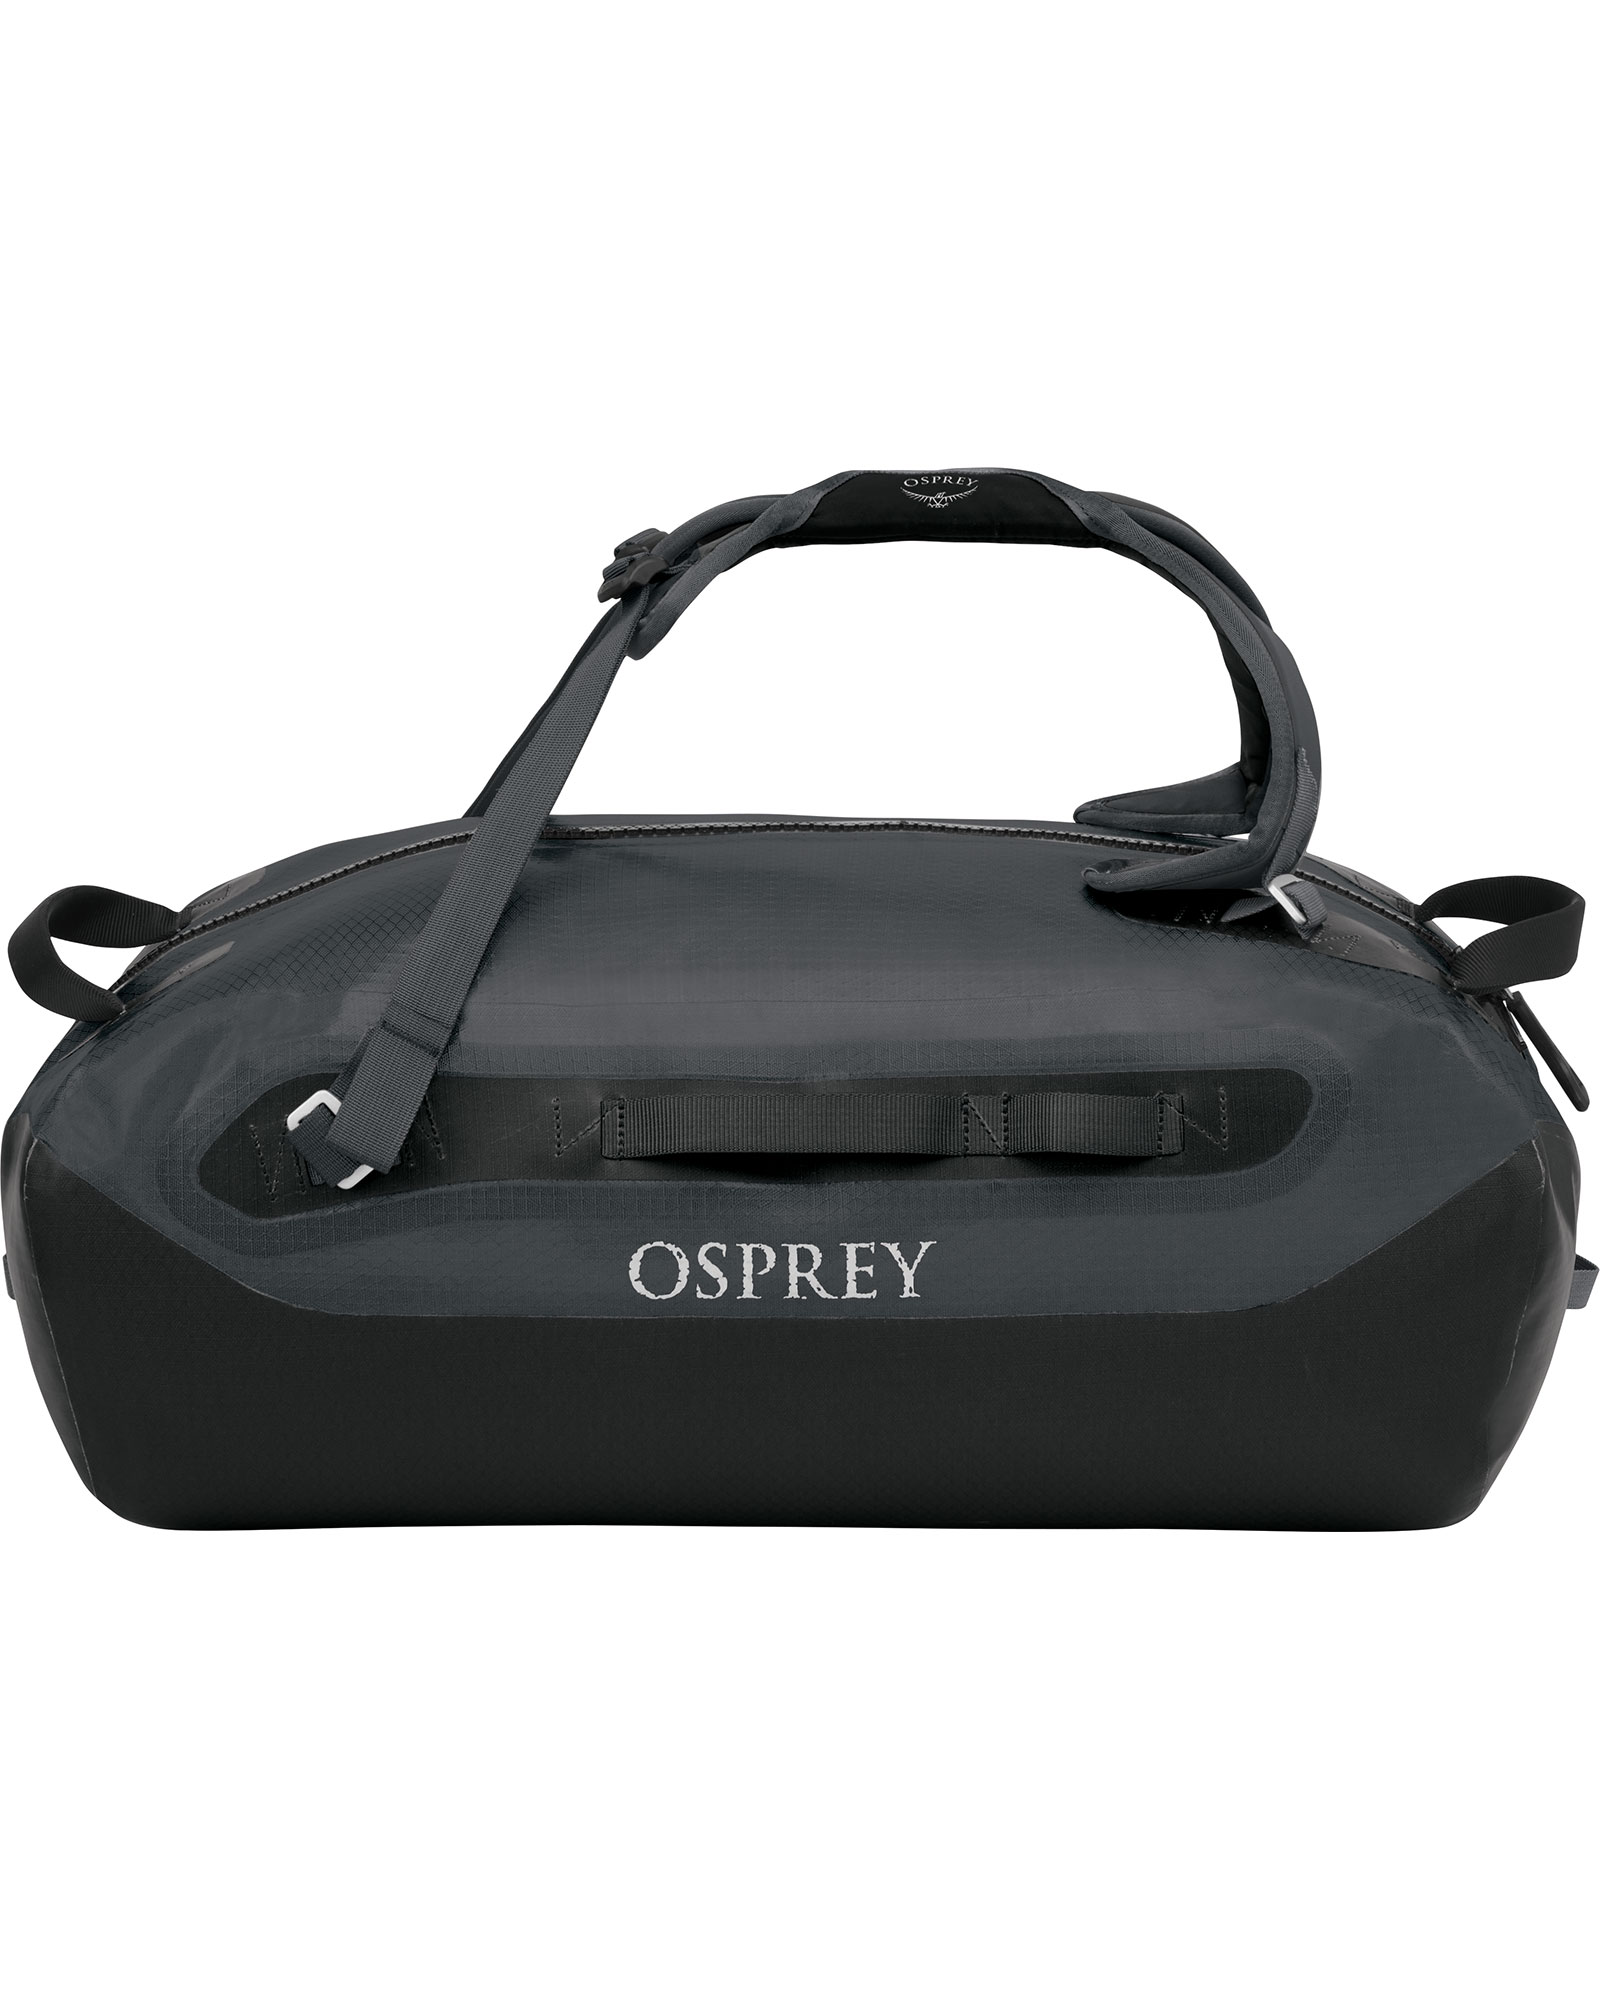 Osprey Transporter 40 Waterproof Duffel - Tunnel Vision Grey